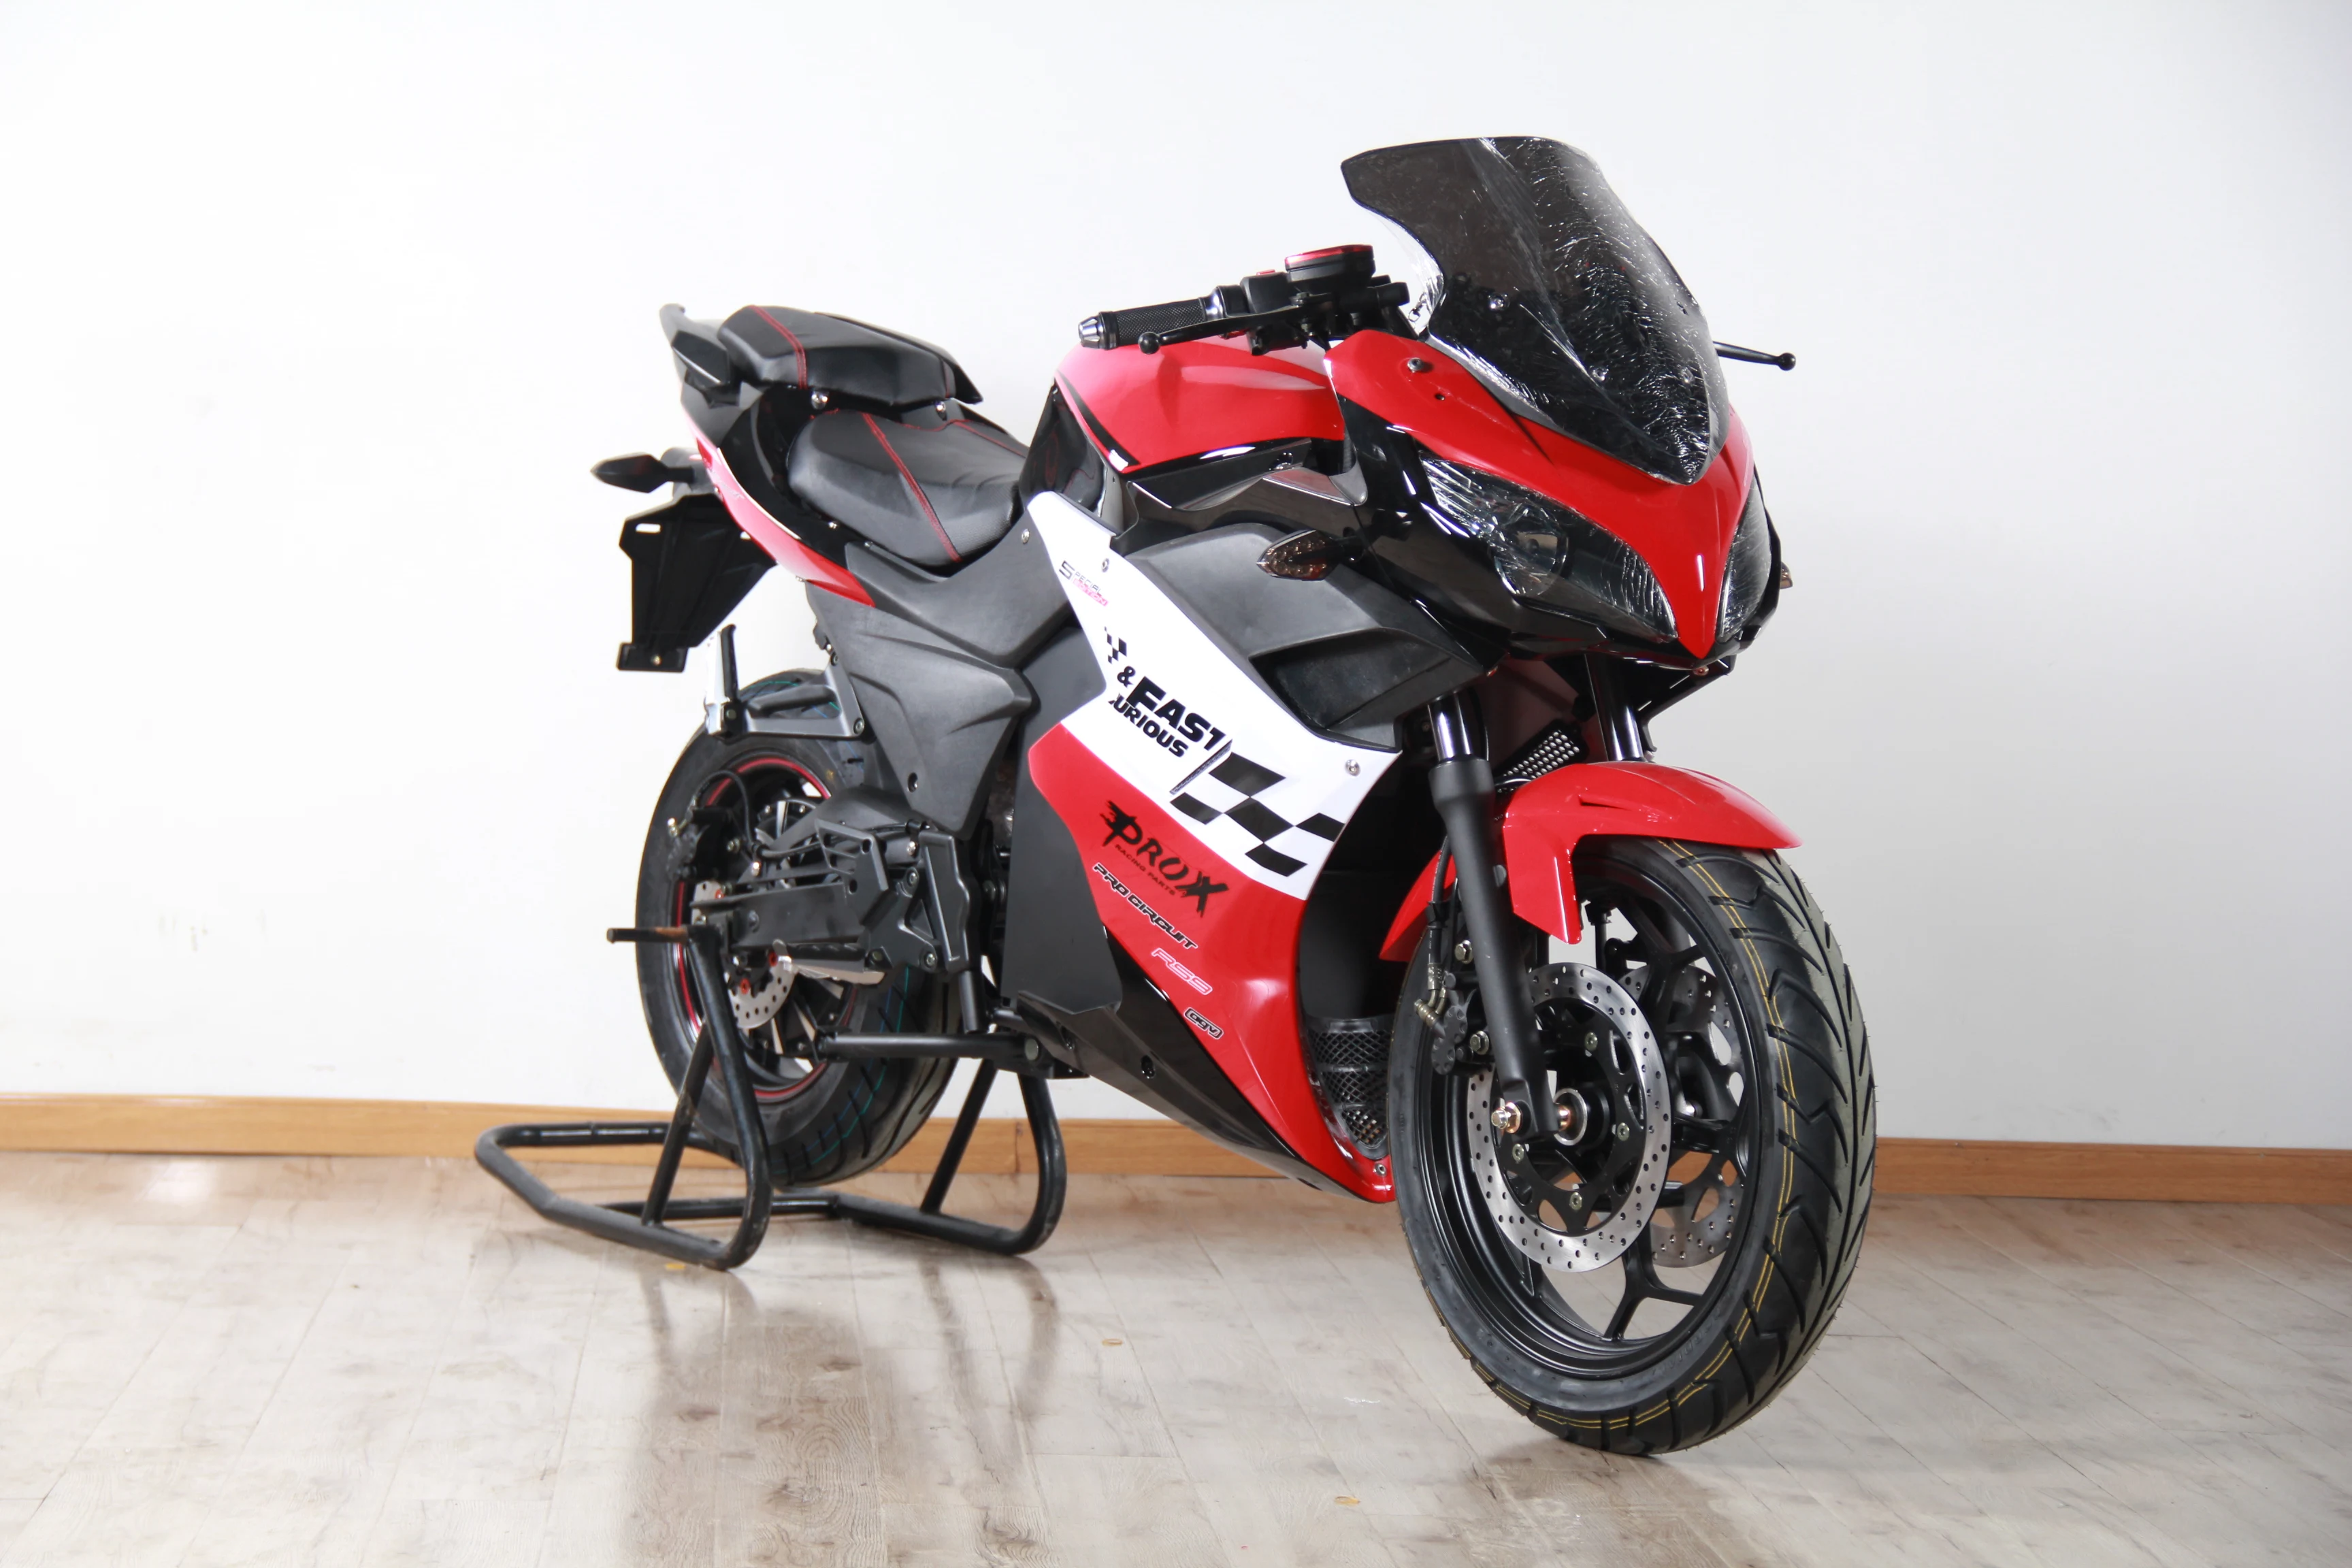 Diy motos chinas precios cheap price electric motorcycle companies